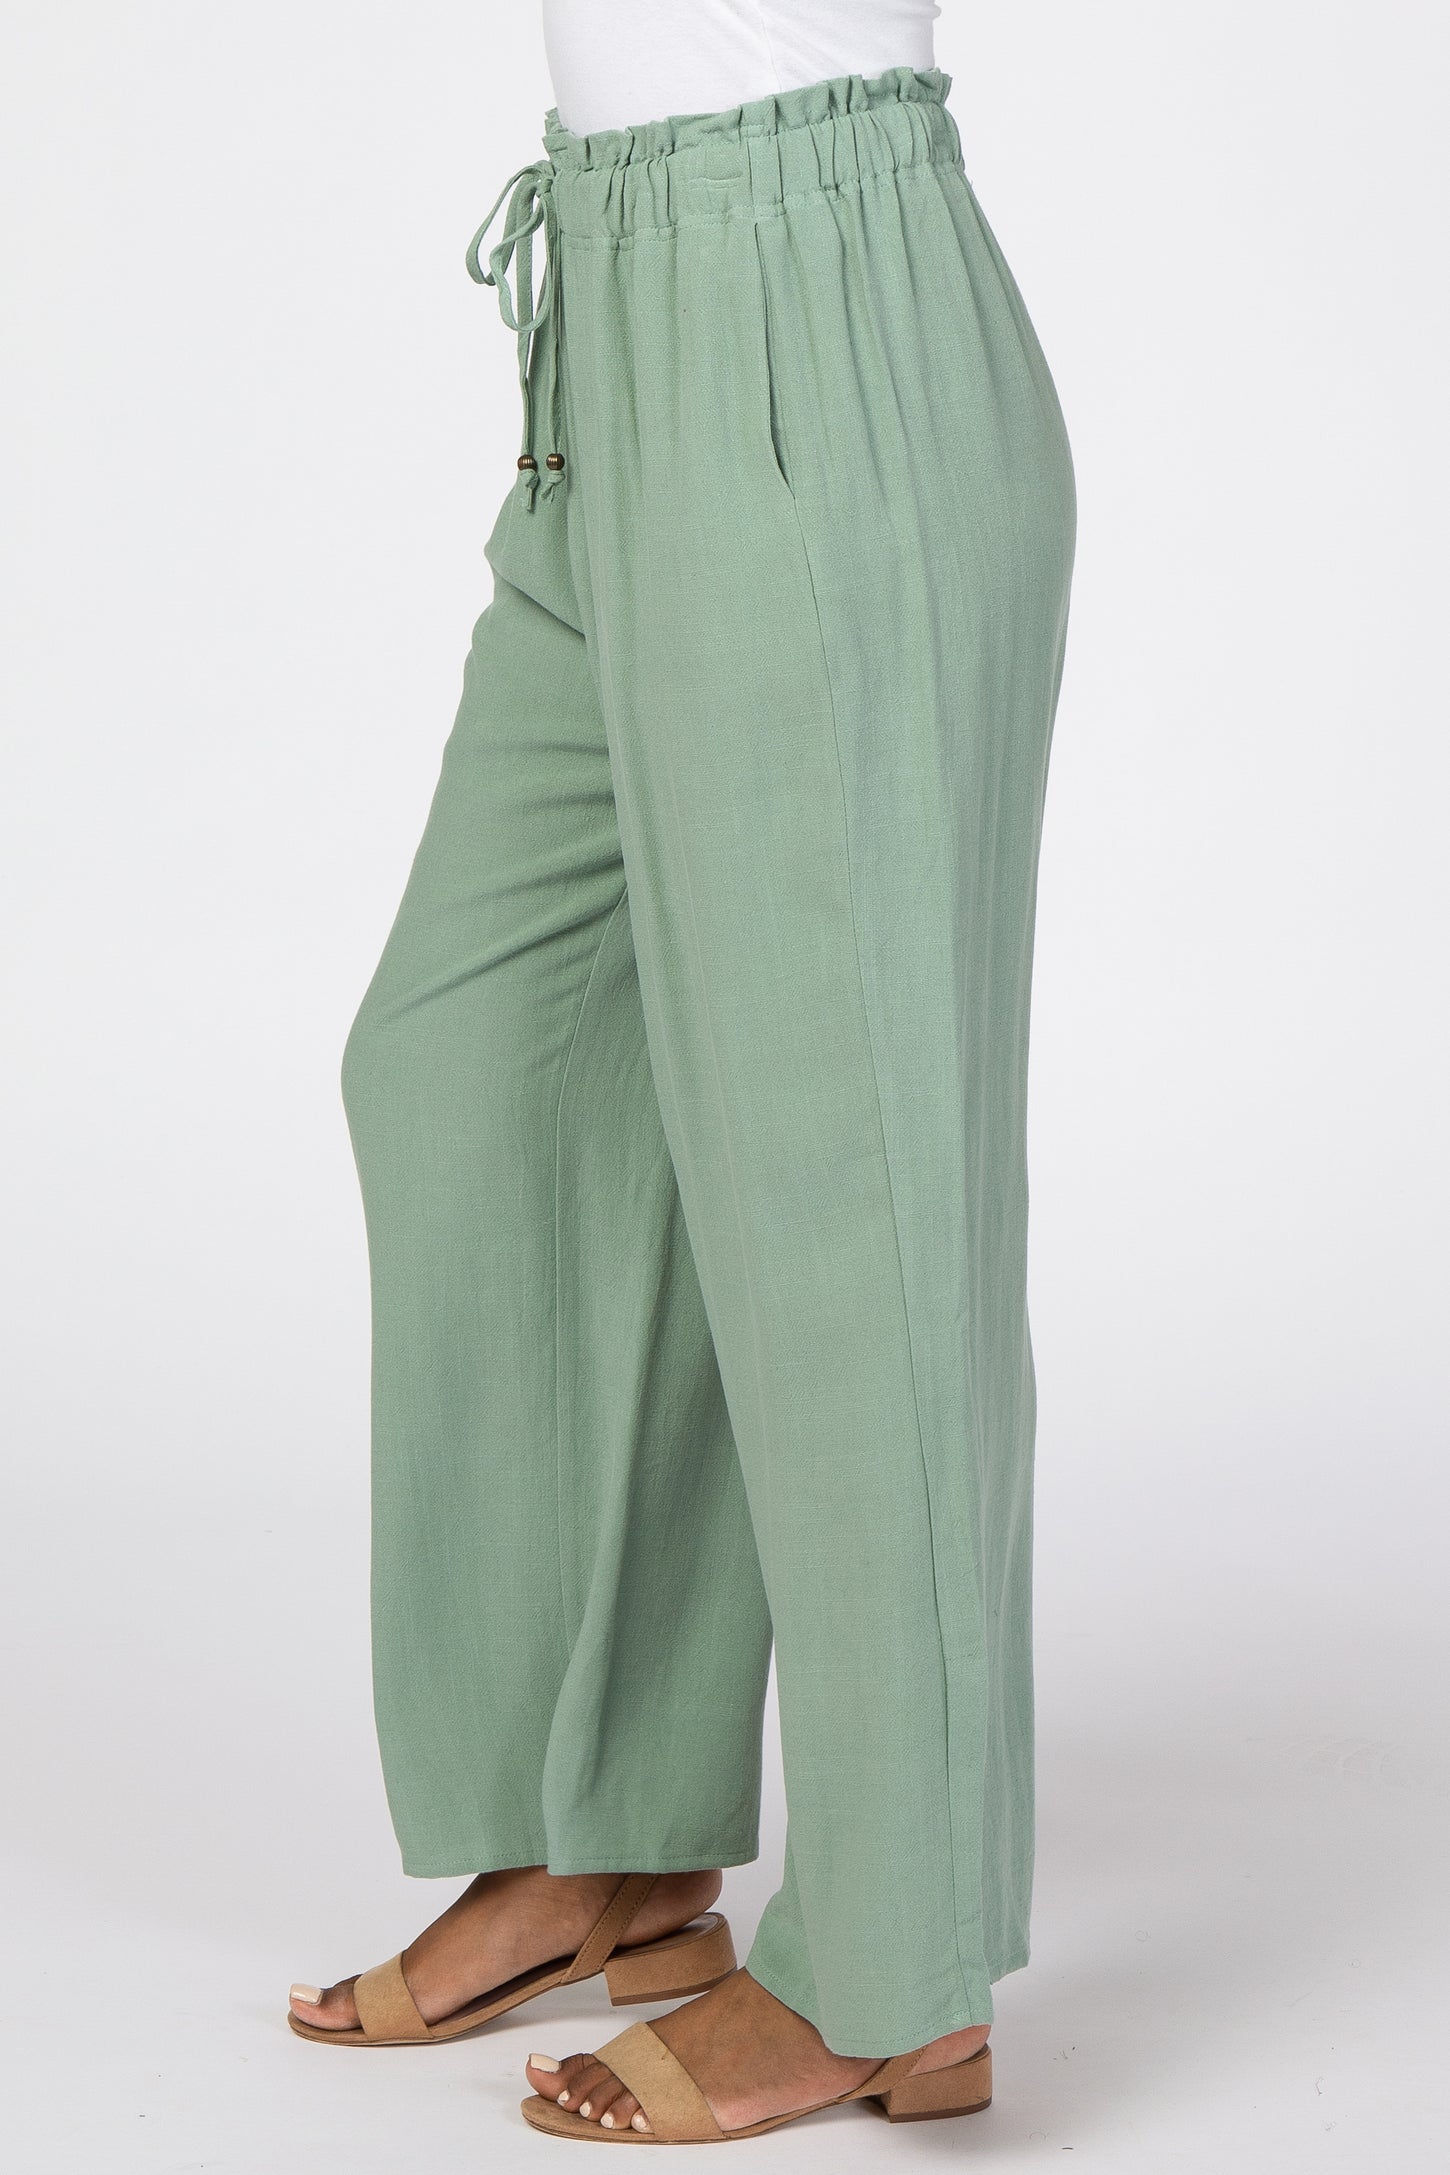 Green Linen Drawstring Pants